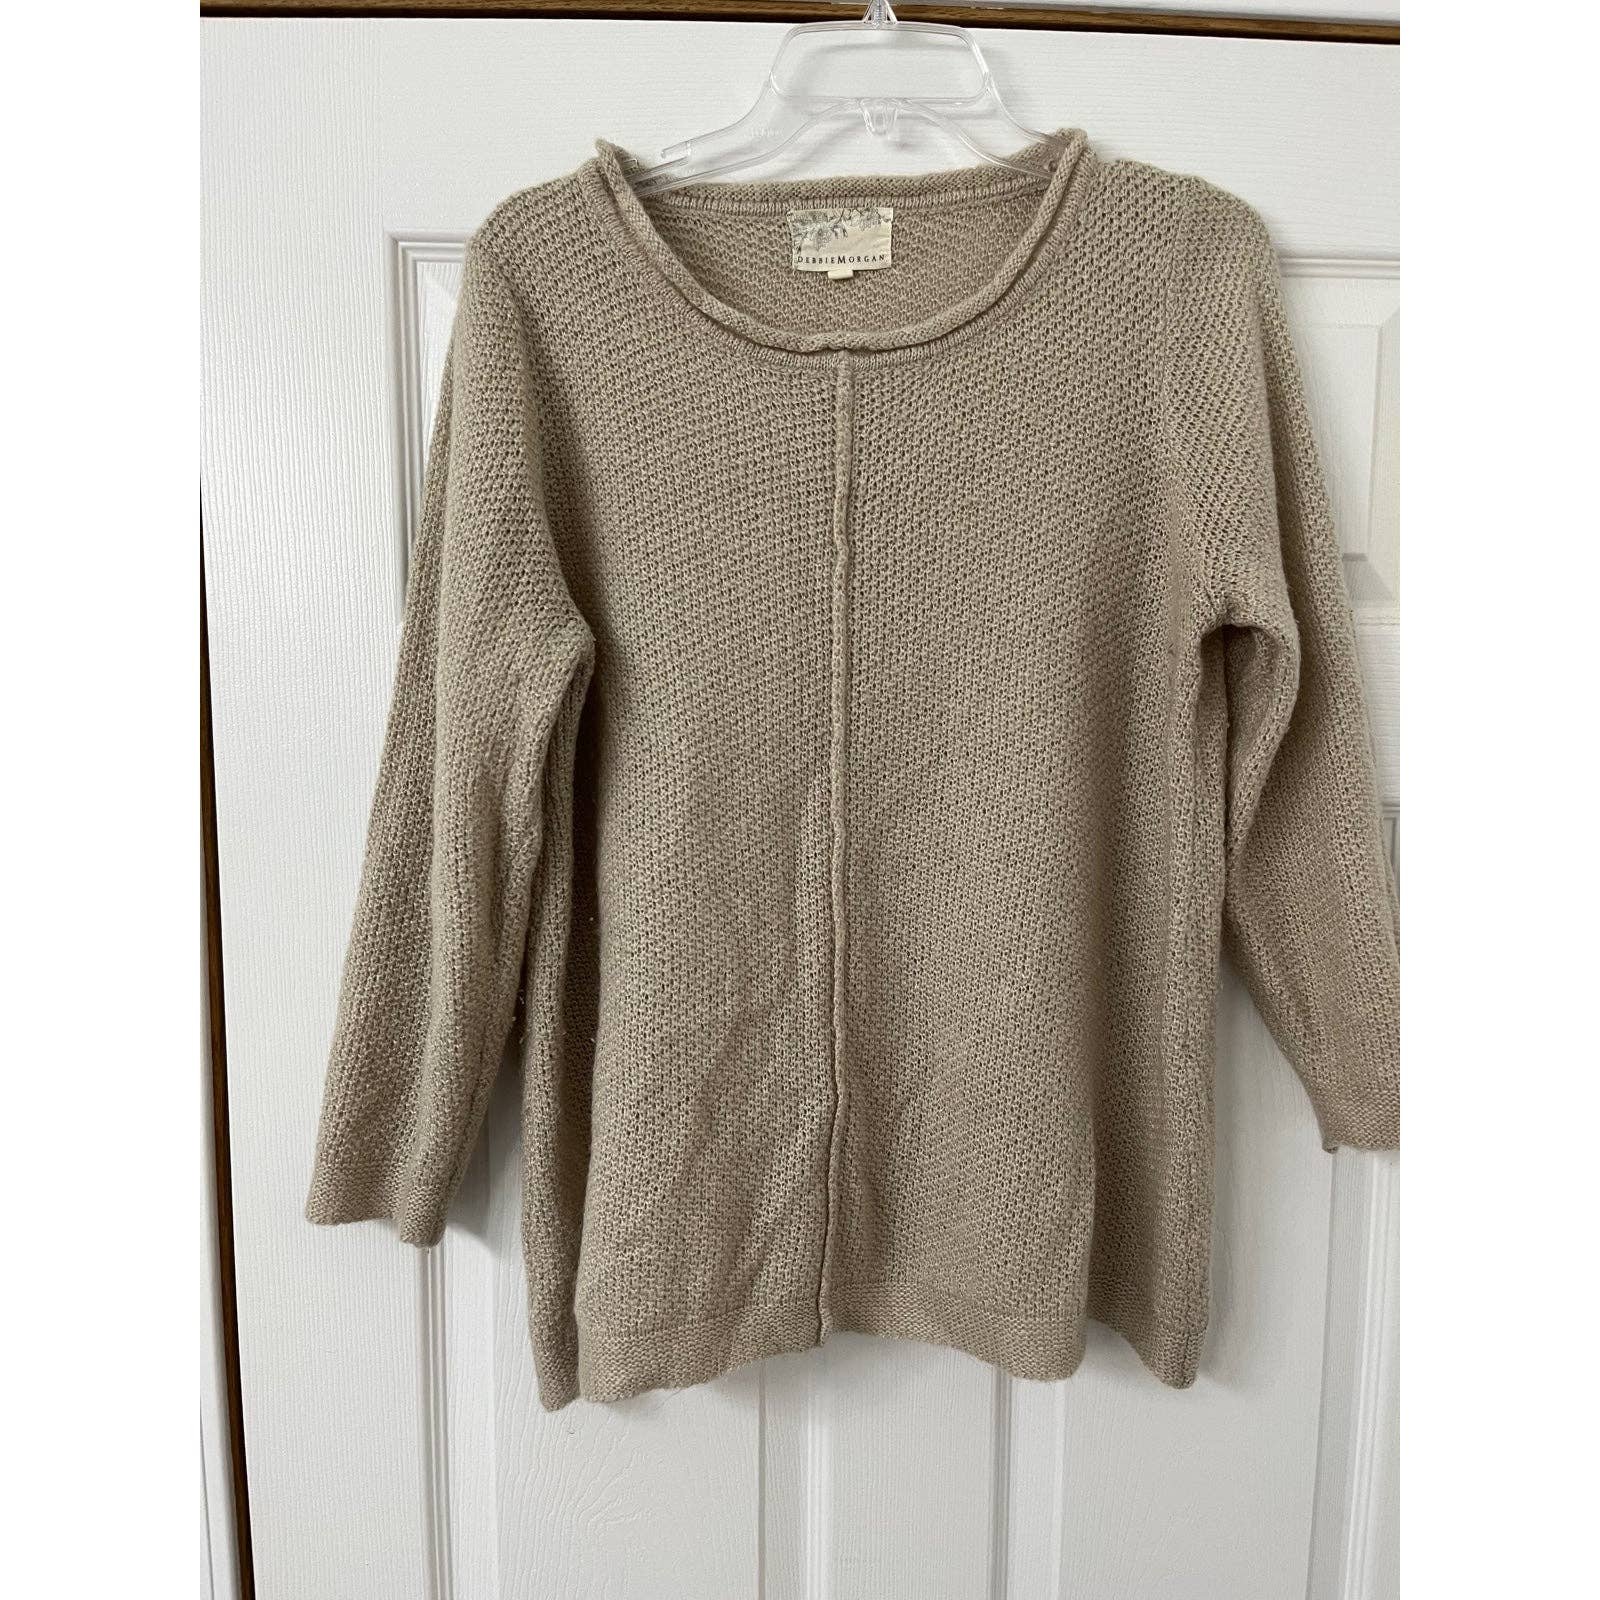 Wholesale price Women’s Debbie Morgan Sweater Size L hx